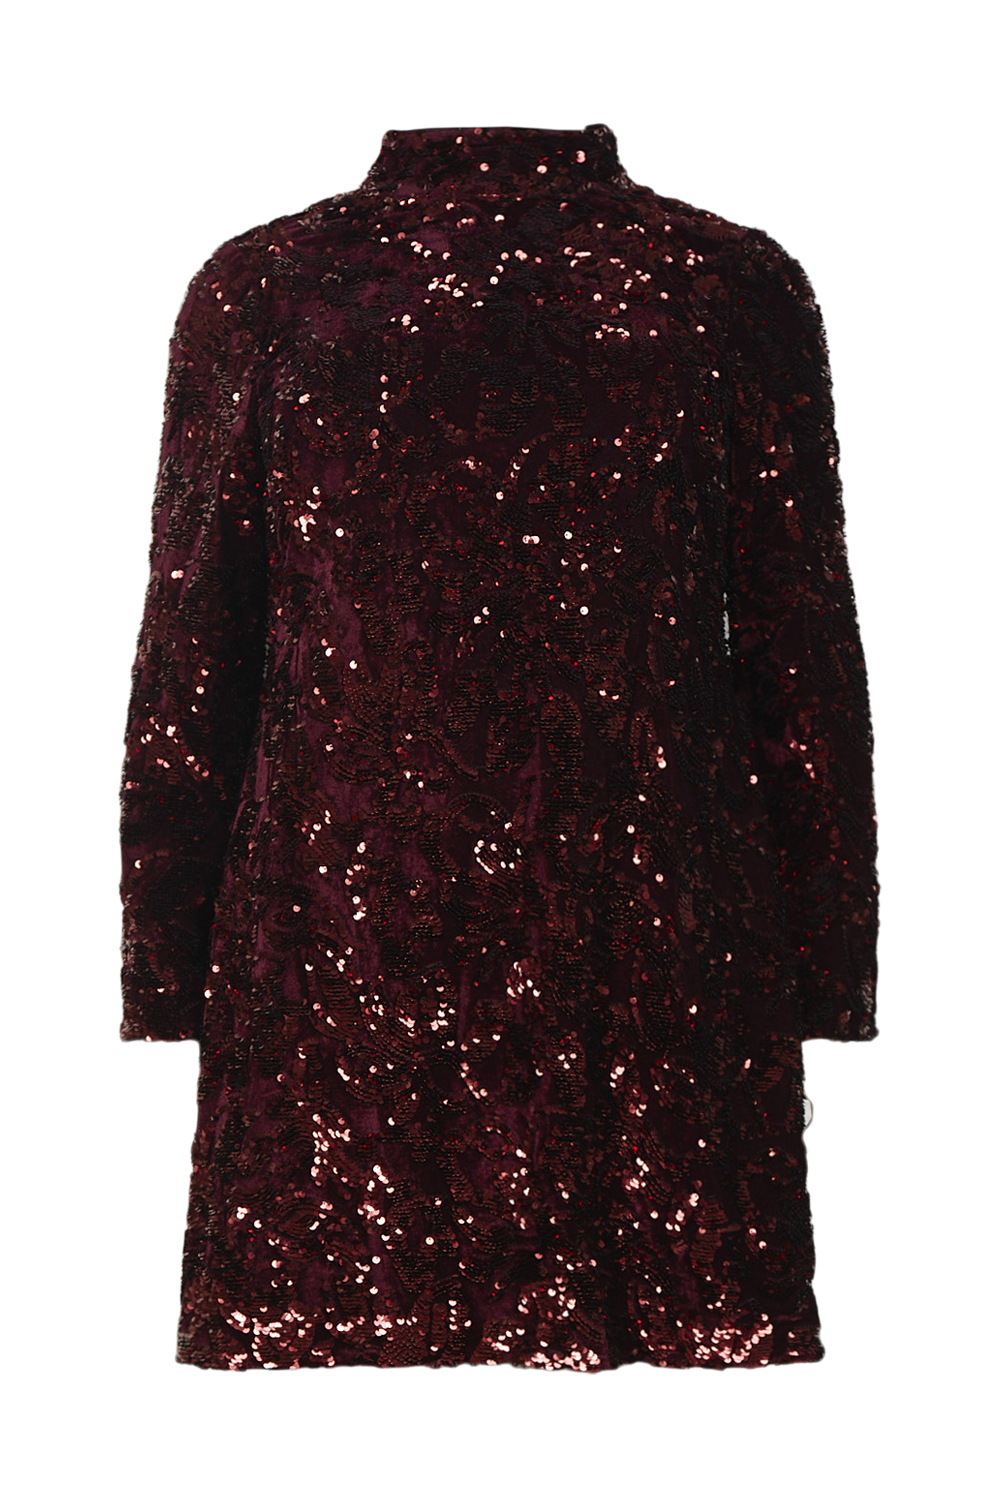 7&gt; Karen Millen Curve Velvet Sequin Woven Stretch Dress €196